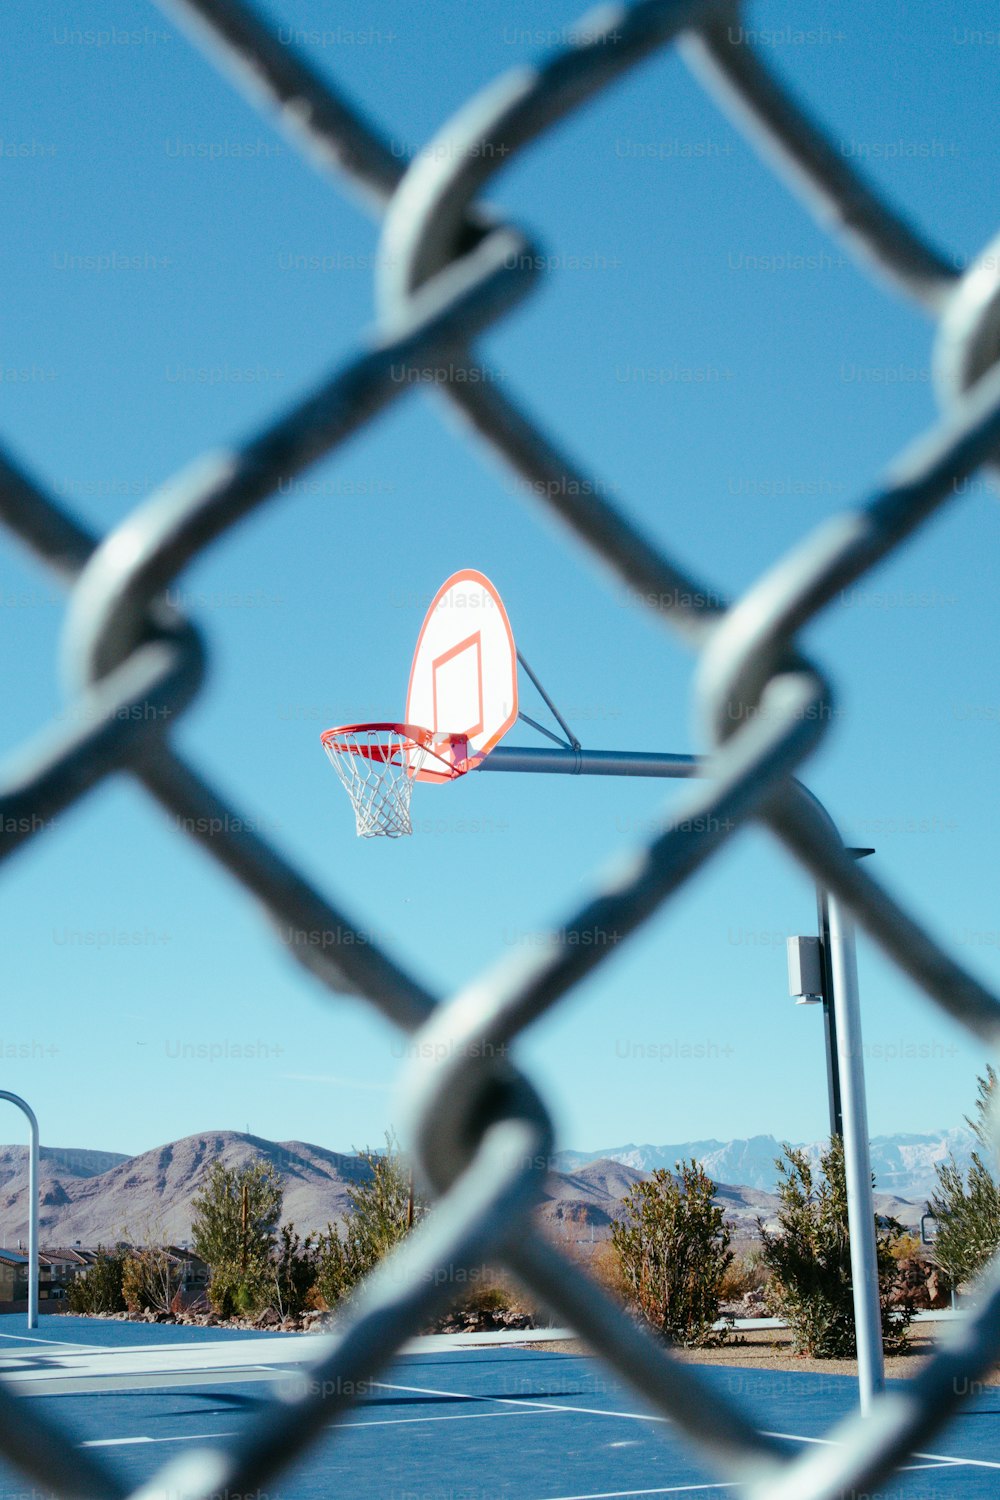 Un aro de baloncesto se ve a través de una cerca de alambre